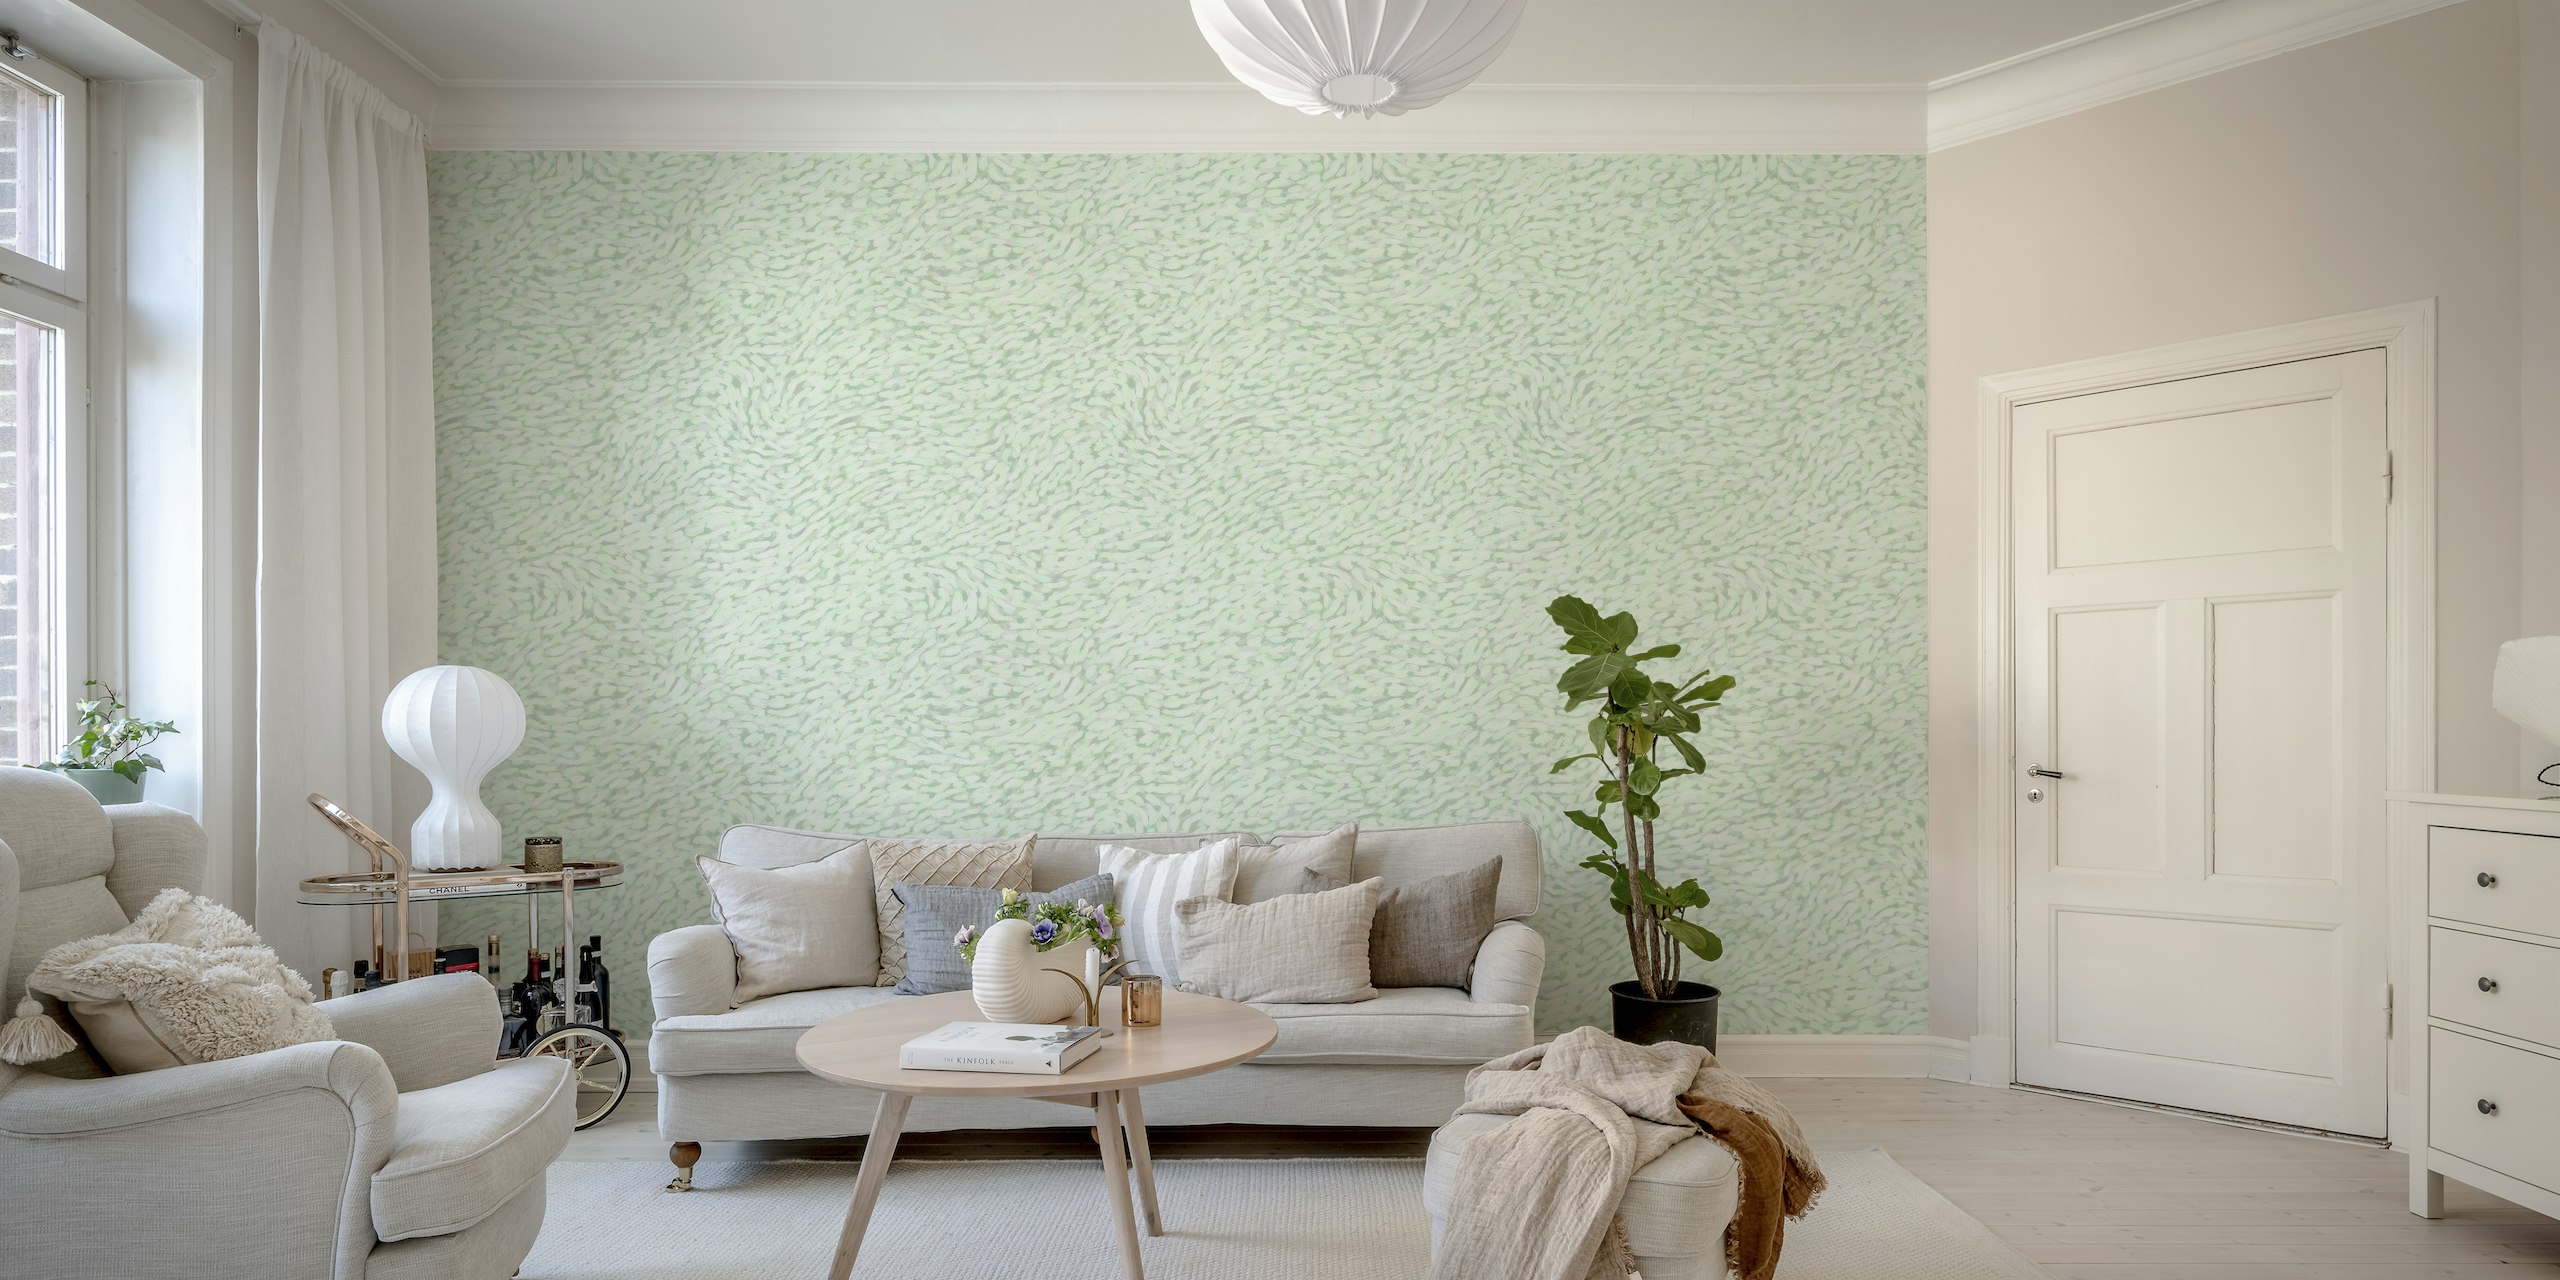 Grünes strukturiertes Wandbild mit fließendem abstraktem Muster